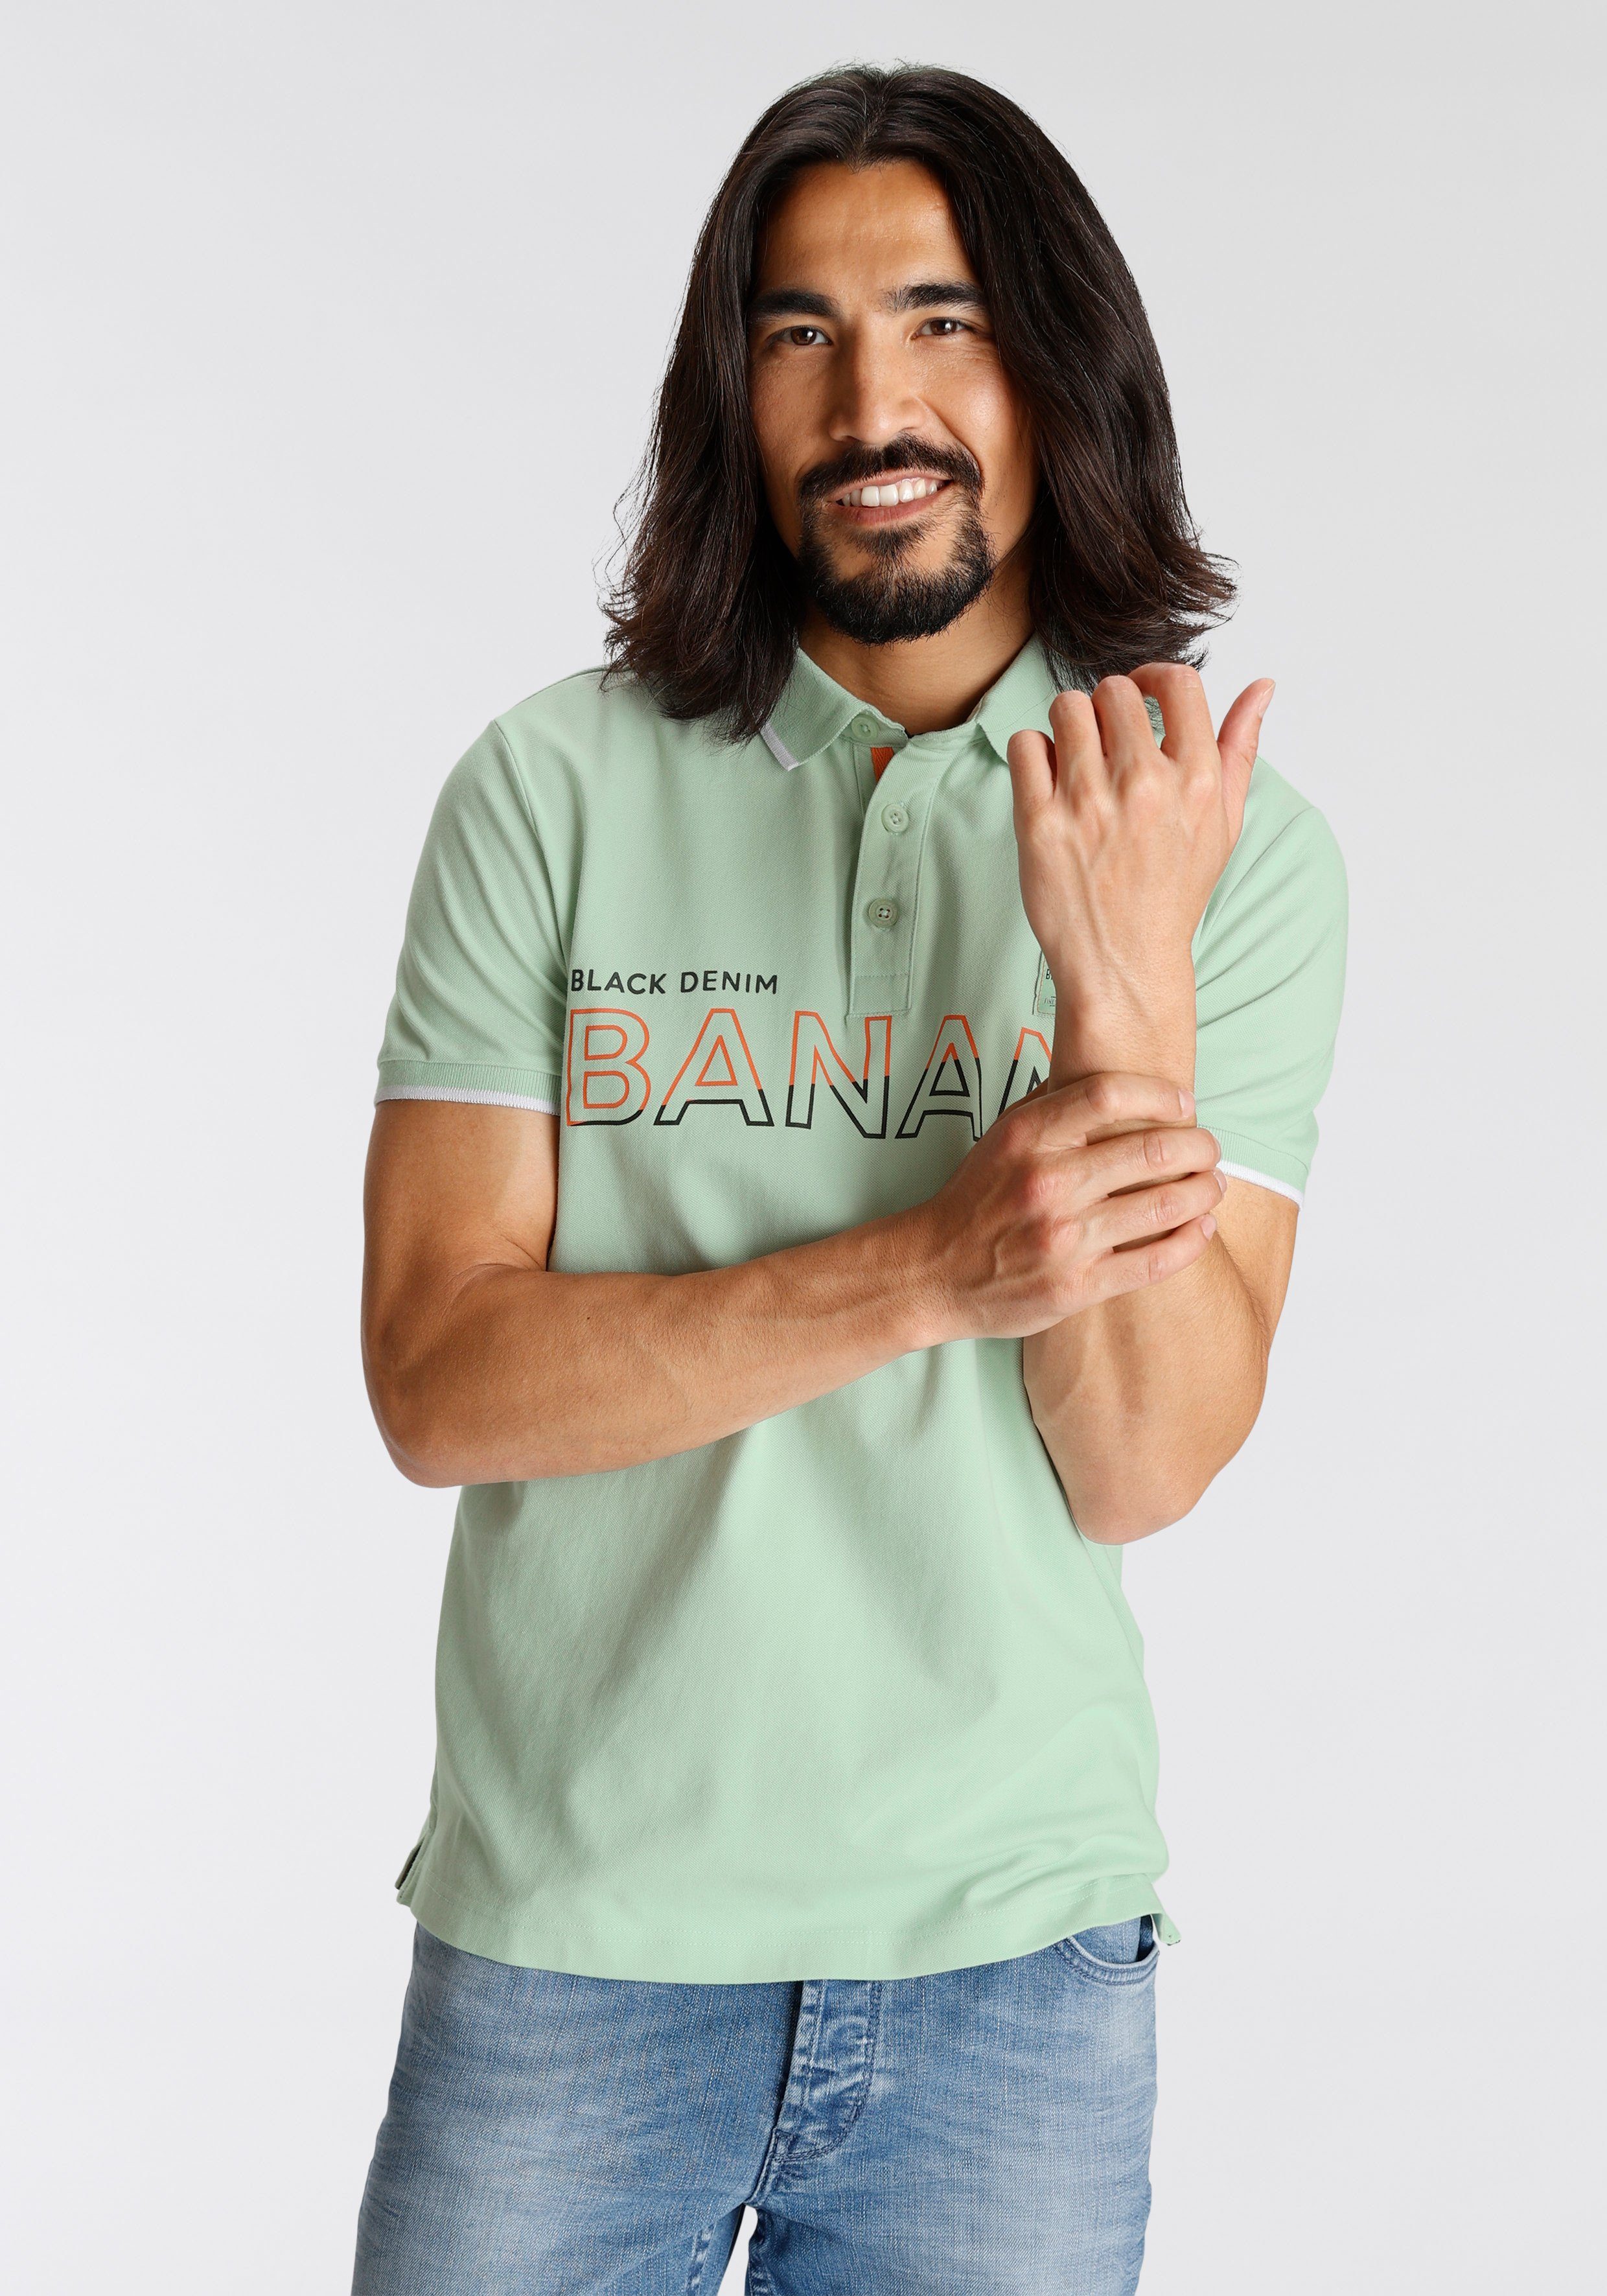 [Steigende Popularität] hell grün Bruno Poloshirt Banani